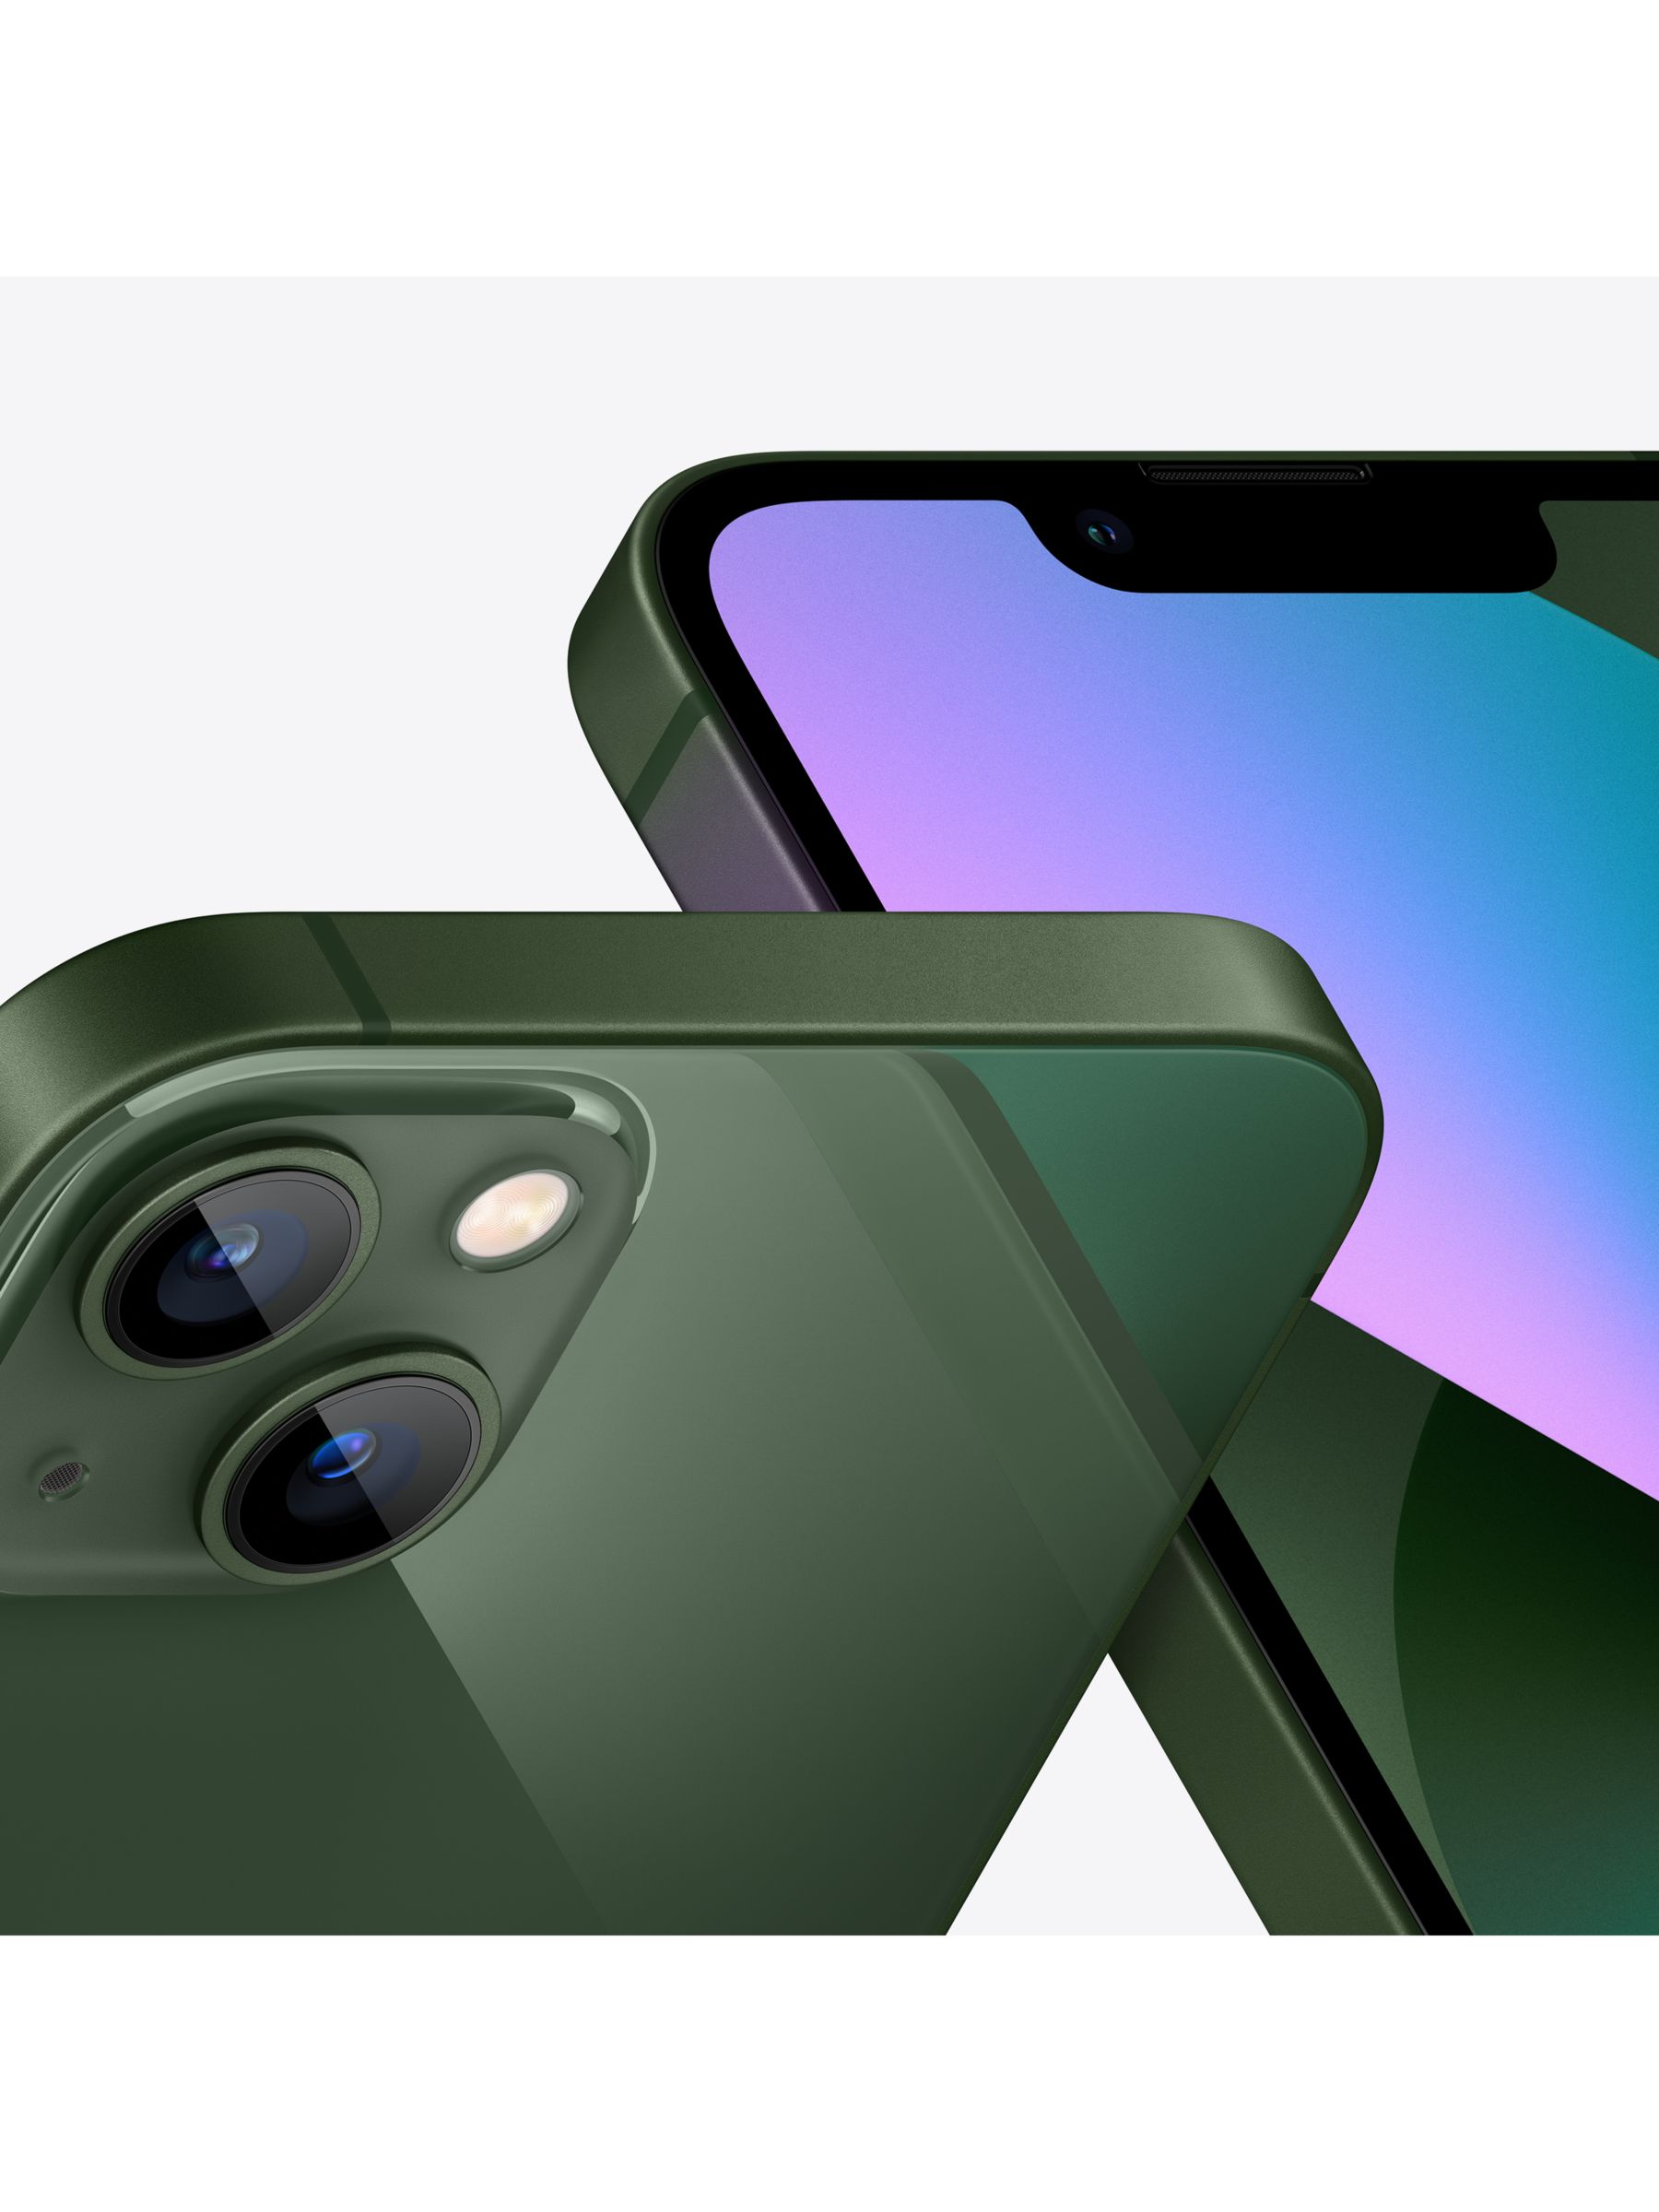 Buy iPhone 13 128GB Green - Apple